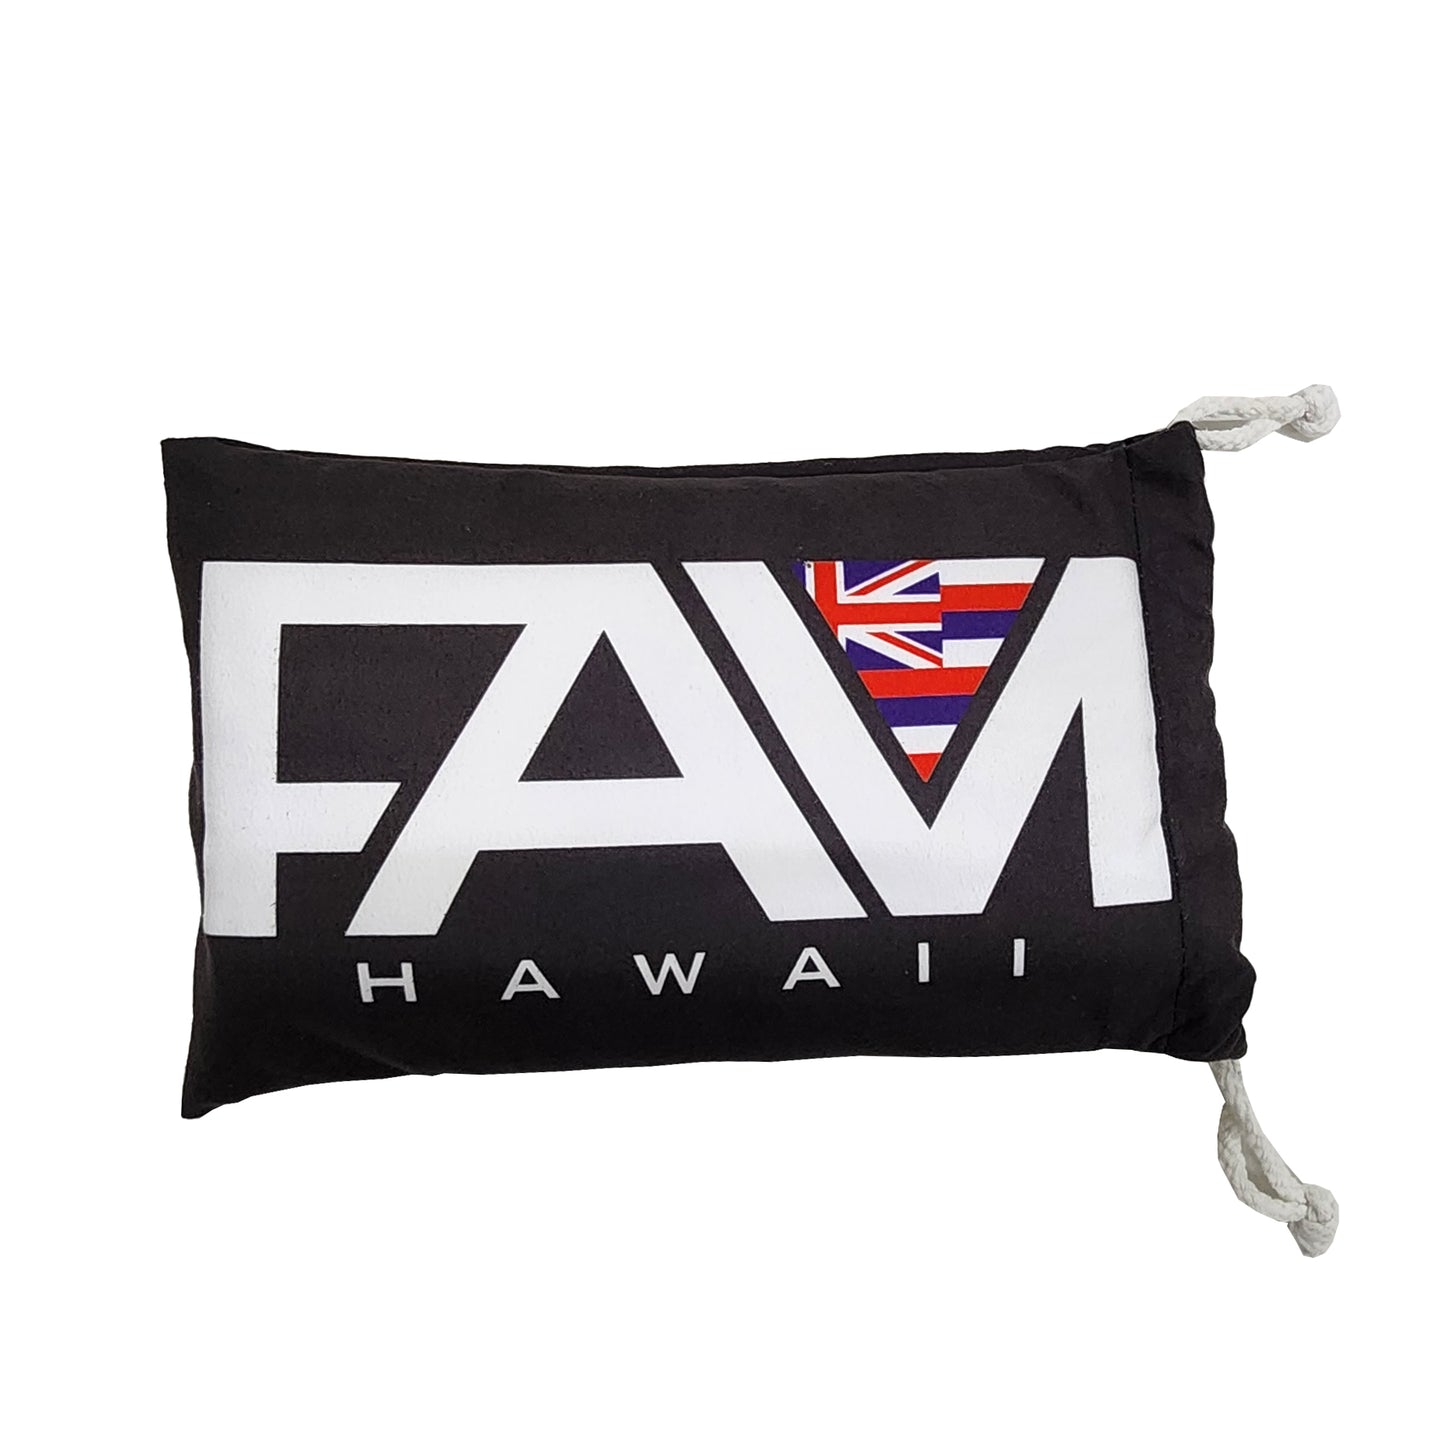 FAM Hawaii Towels